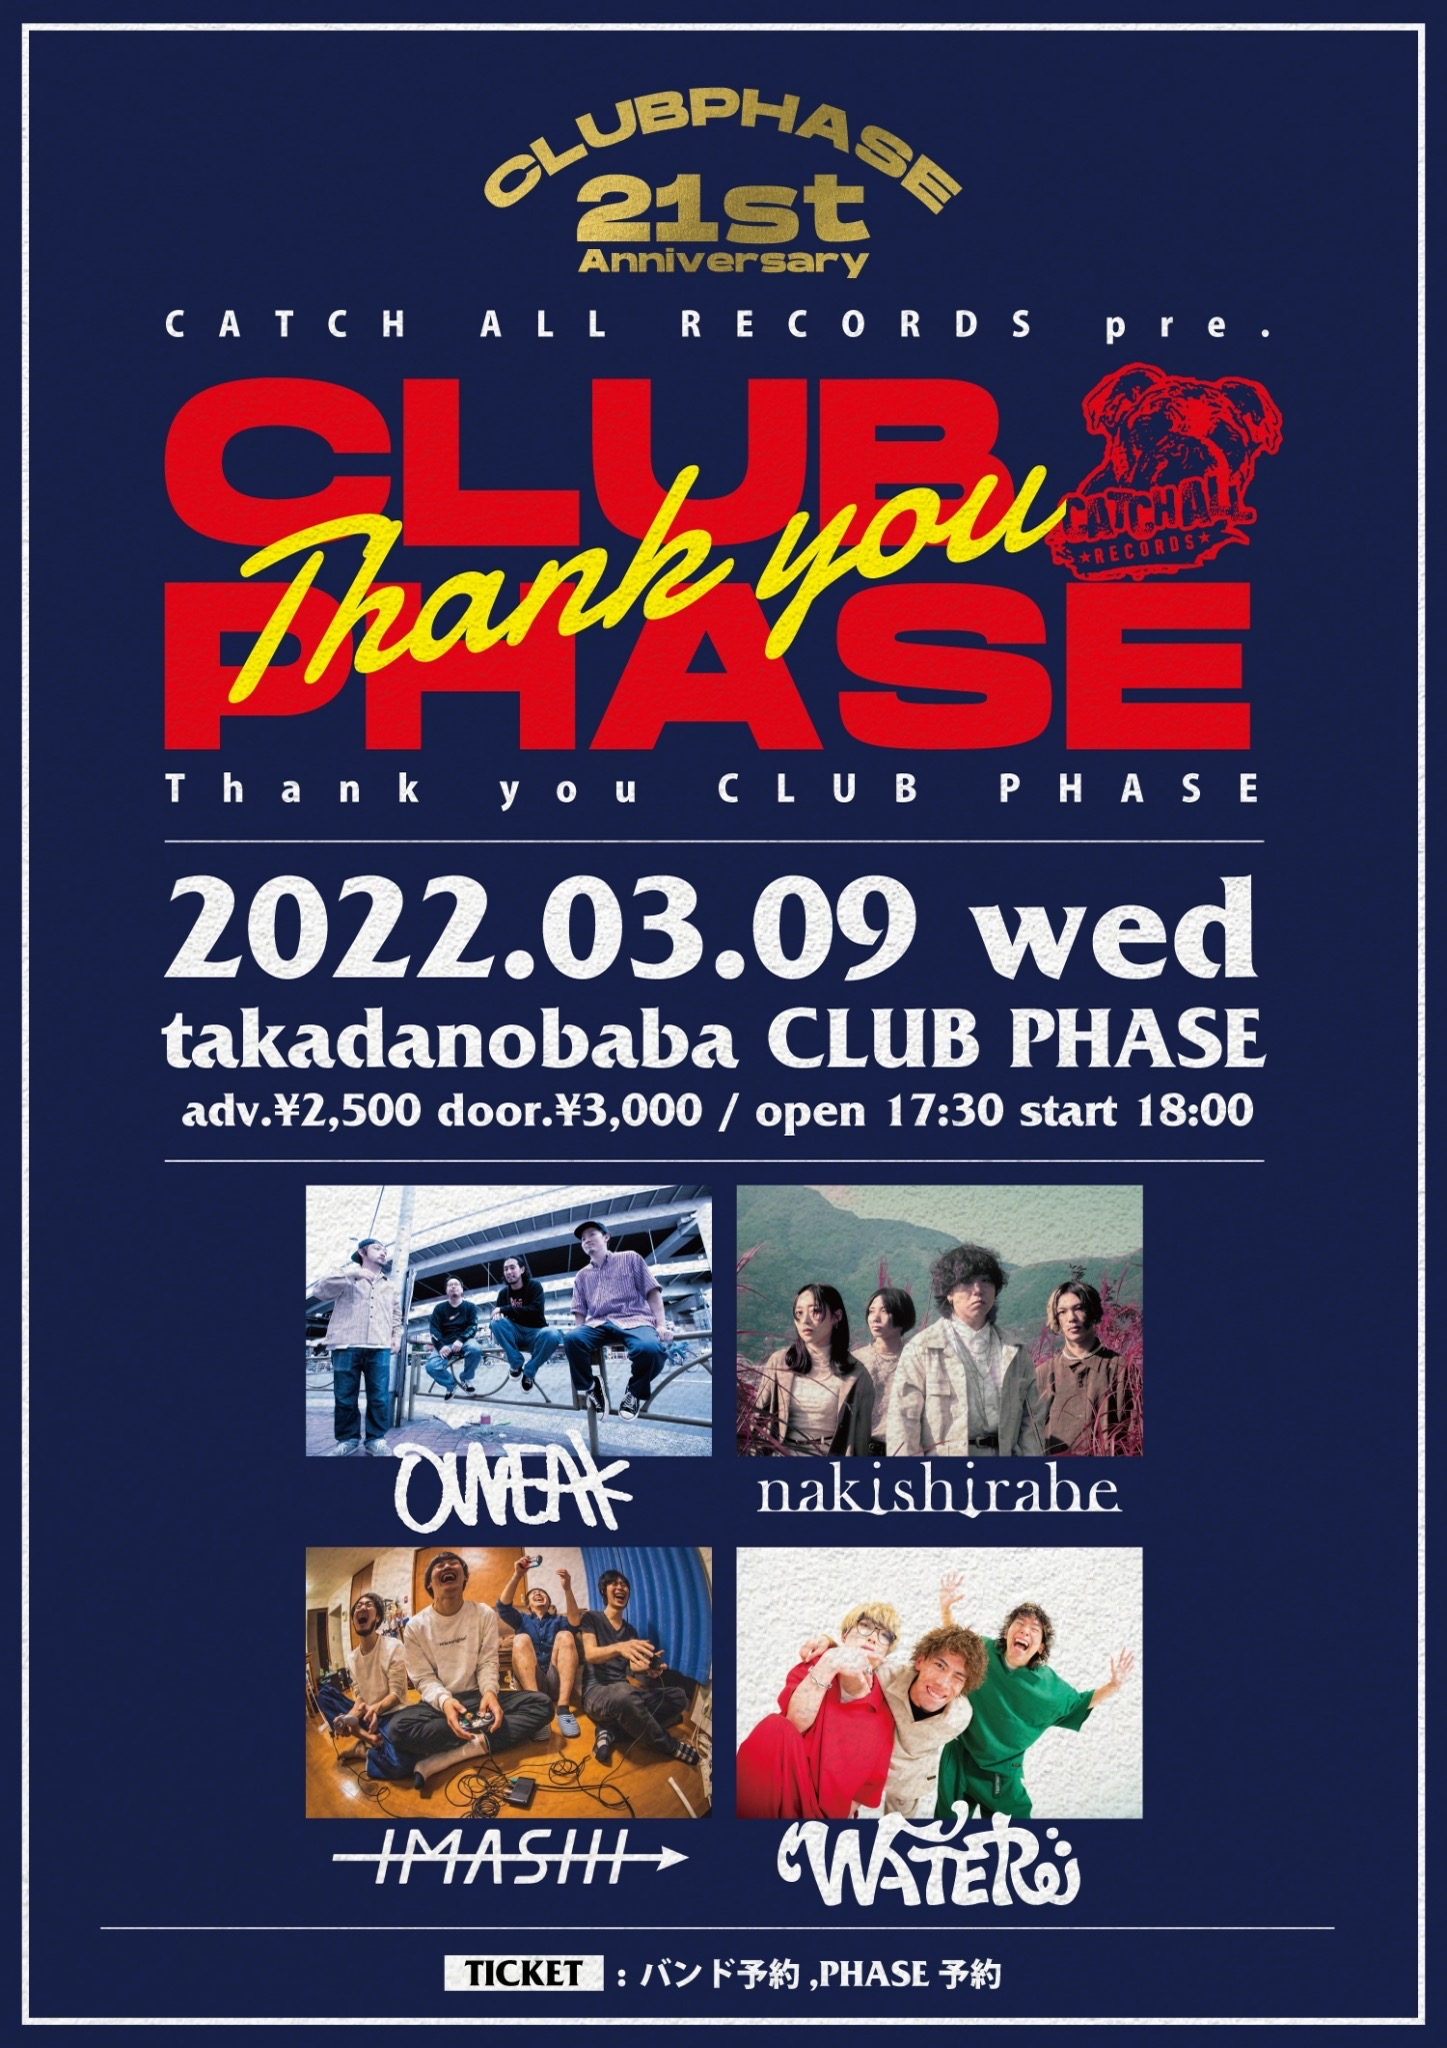 Thank you CLUB PHASE